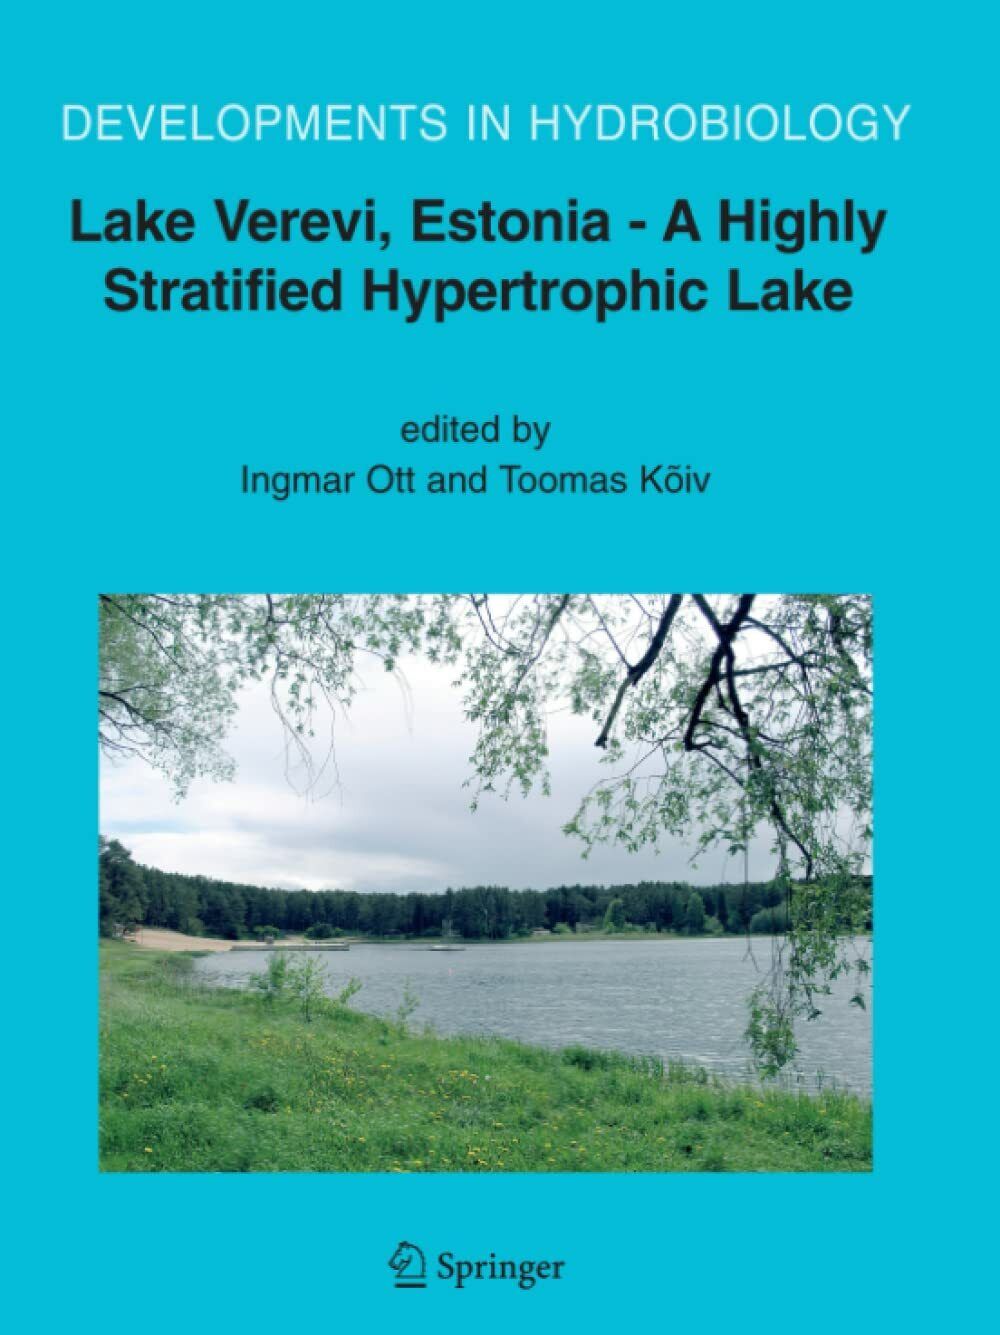 Lake Verevi, Estonia - A Highly Stratified Hypertrophic Lake - Springer, 2010